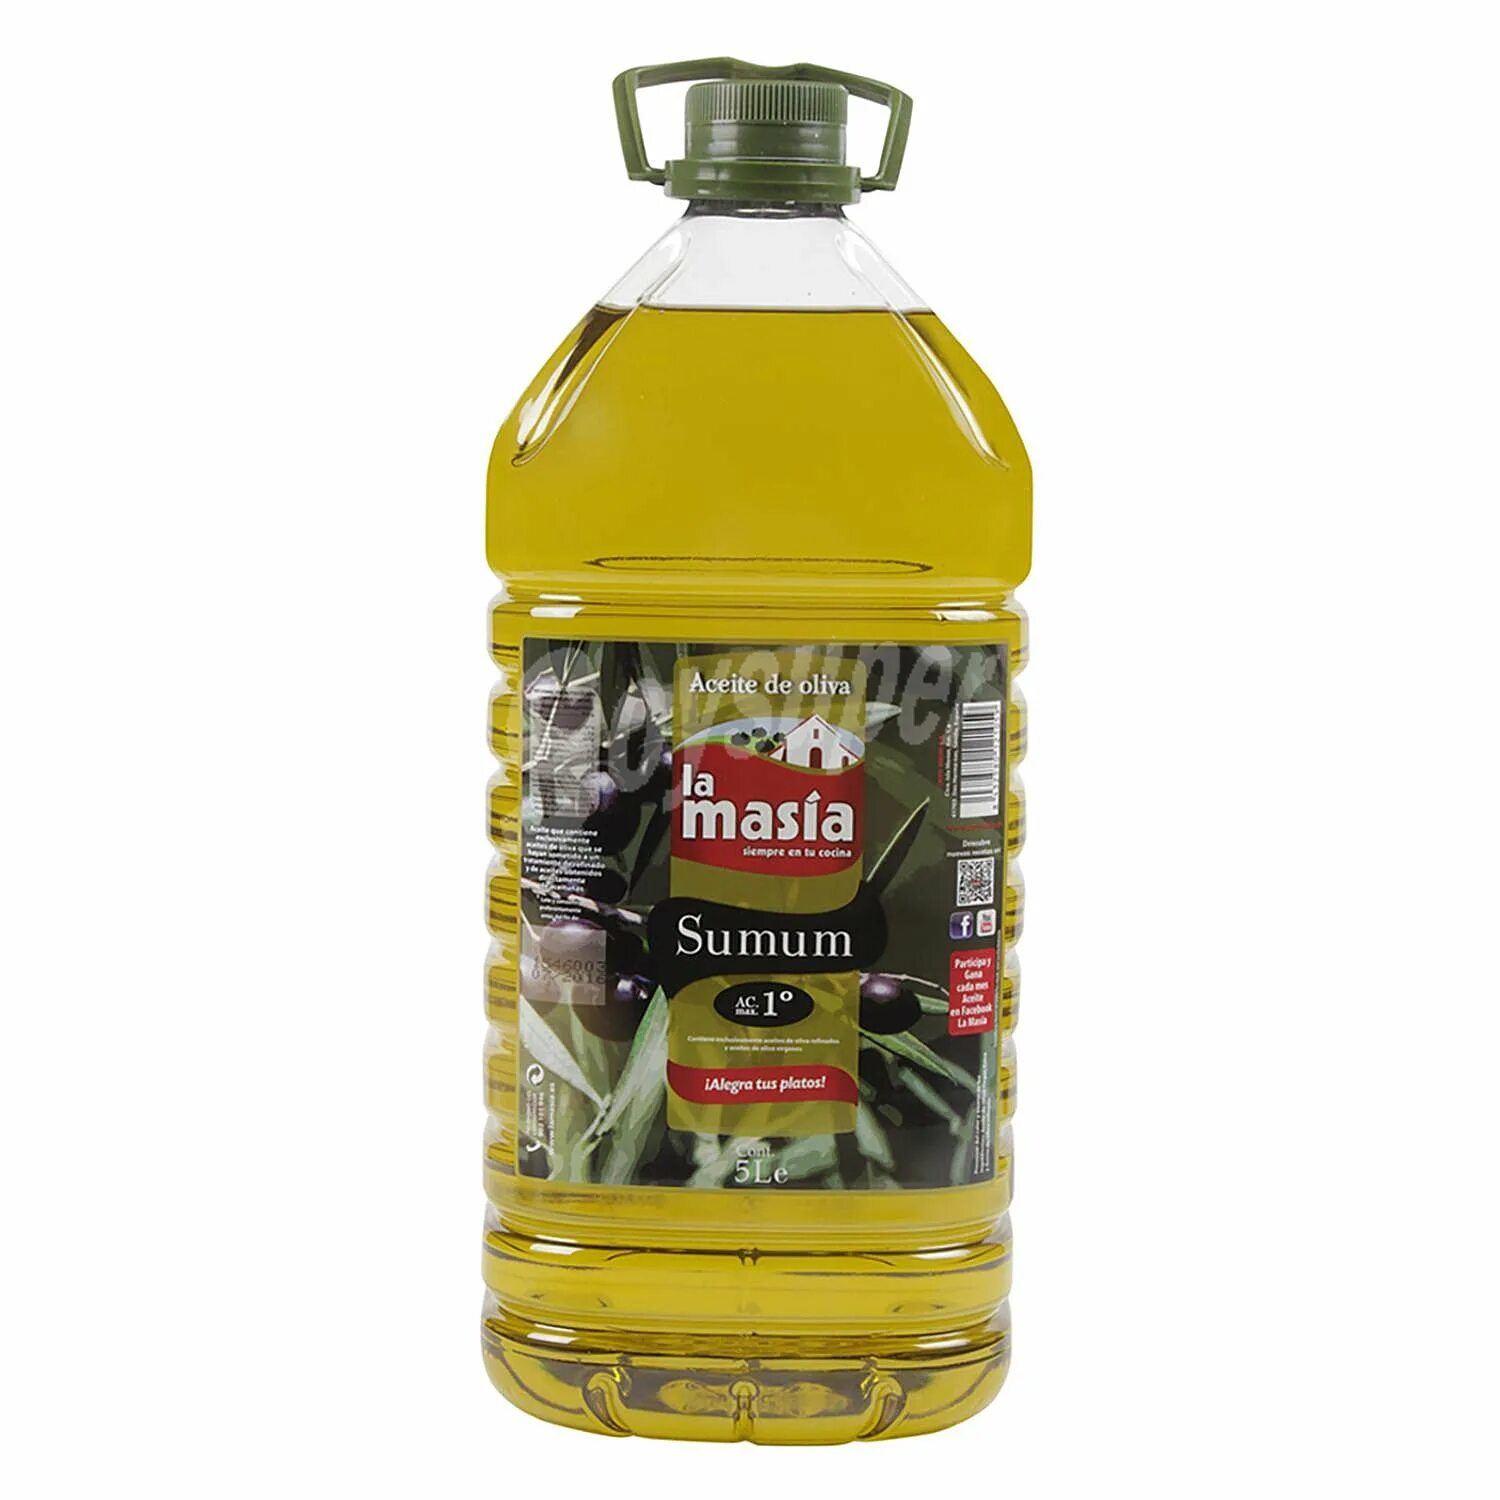 La Masia оливковое масло. Испанское оливковое масло Extra Virgin. Оливковое масло Испания.